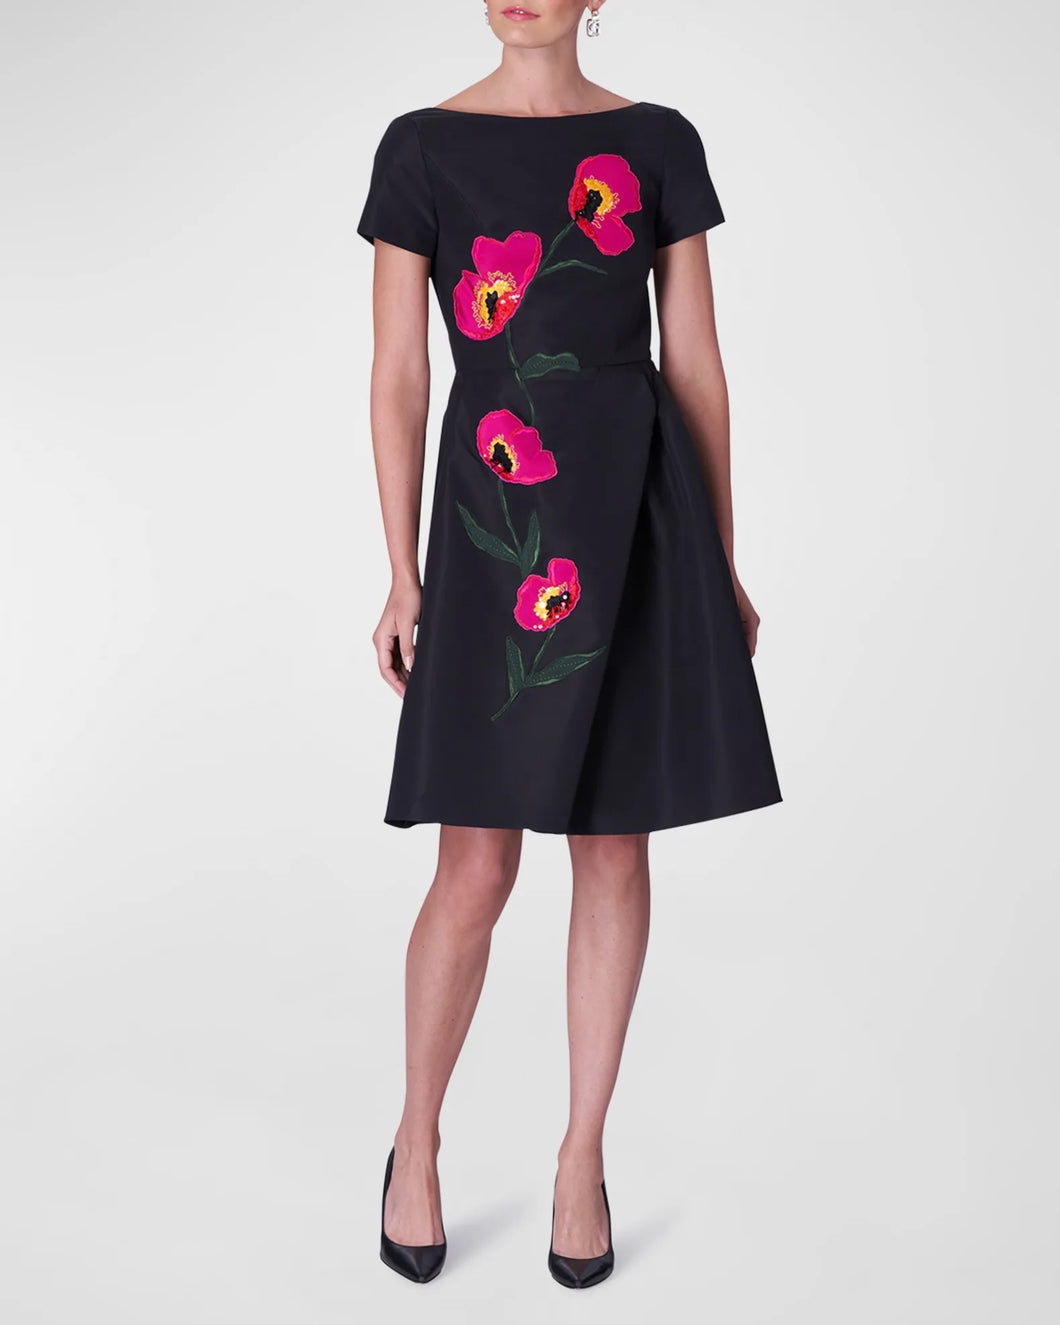 Carolina Herrera - Floral Embroidered A-Line Dress